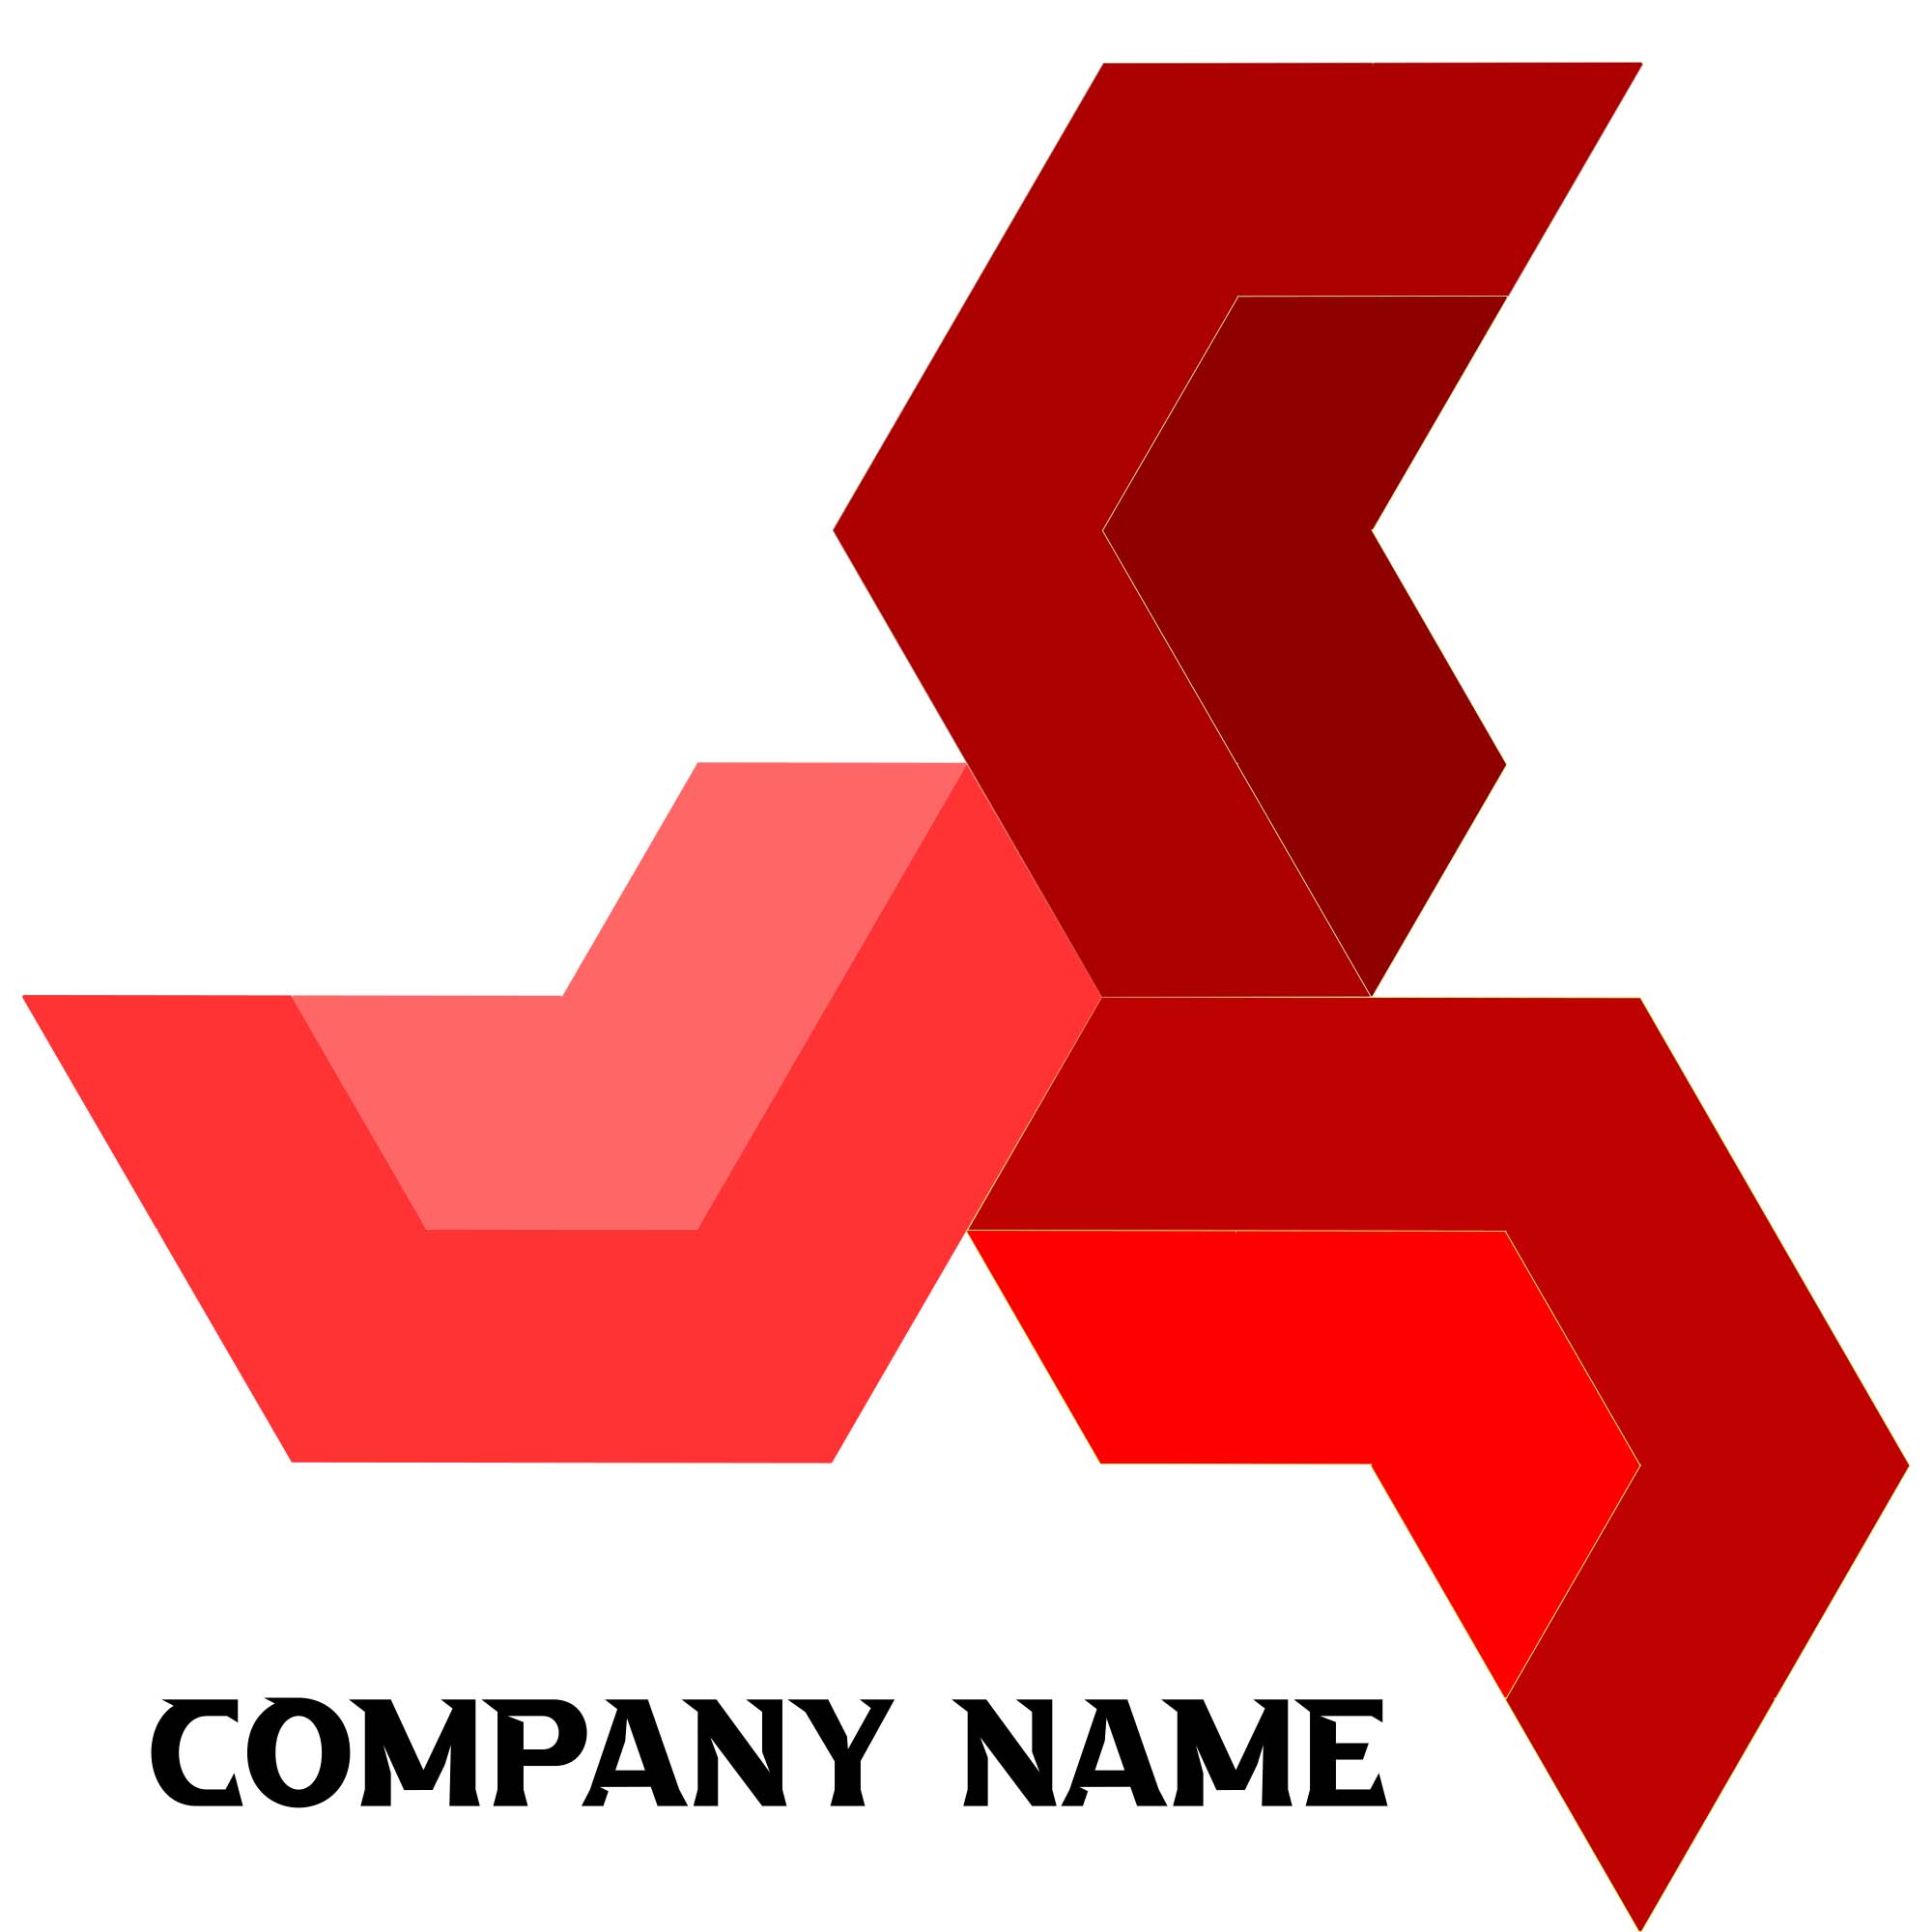 company logo design in illustrator preview image.